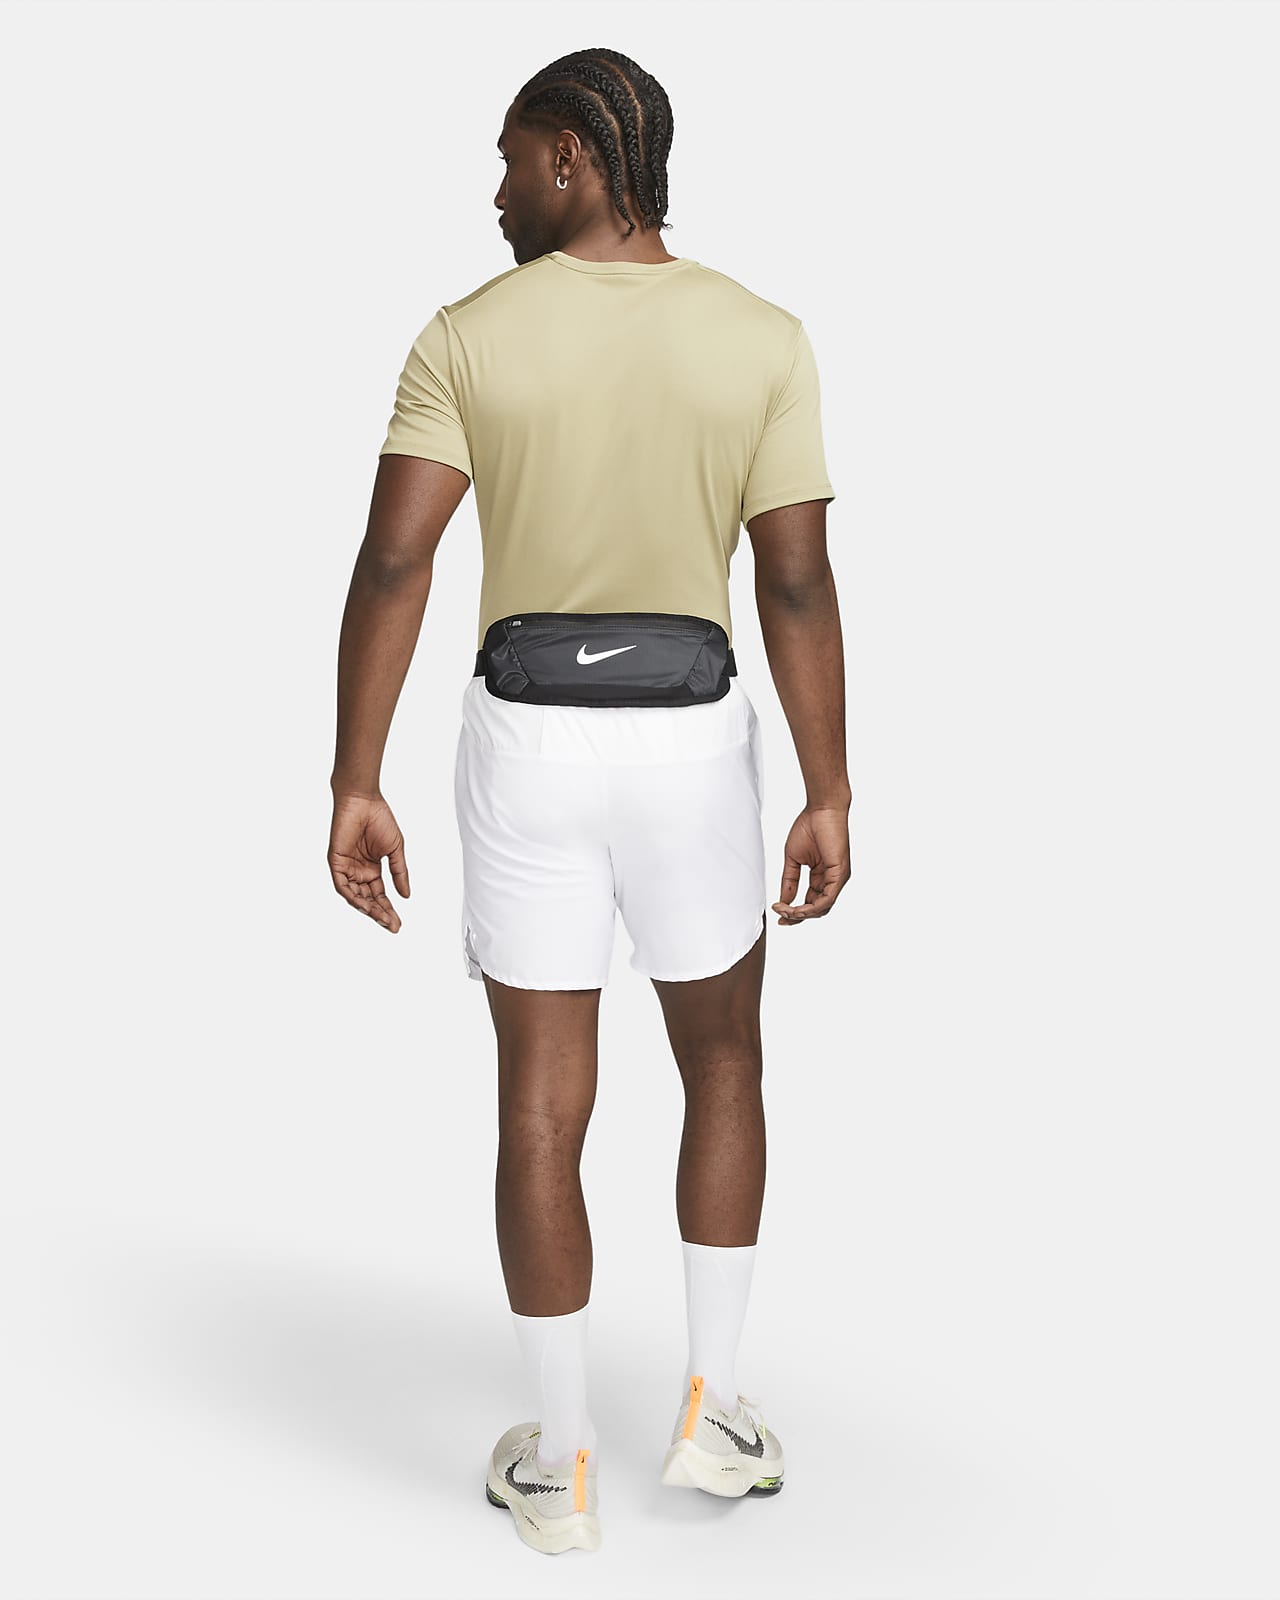 Reflective logo waist pack, Nike, Running Accessories